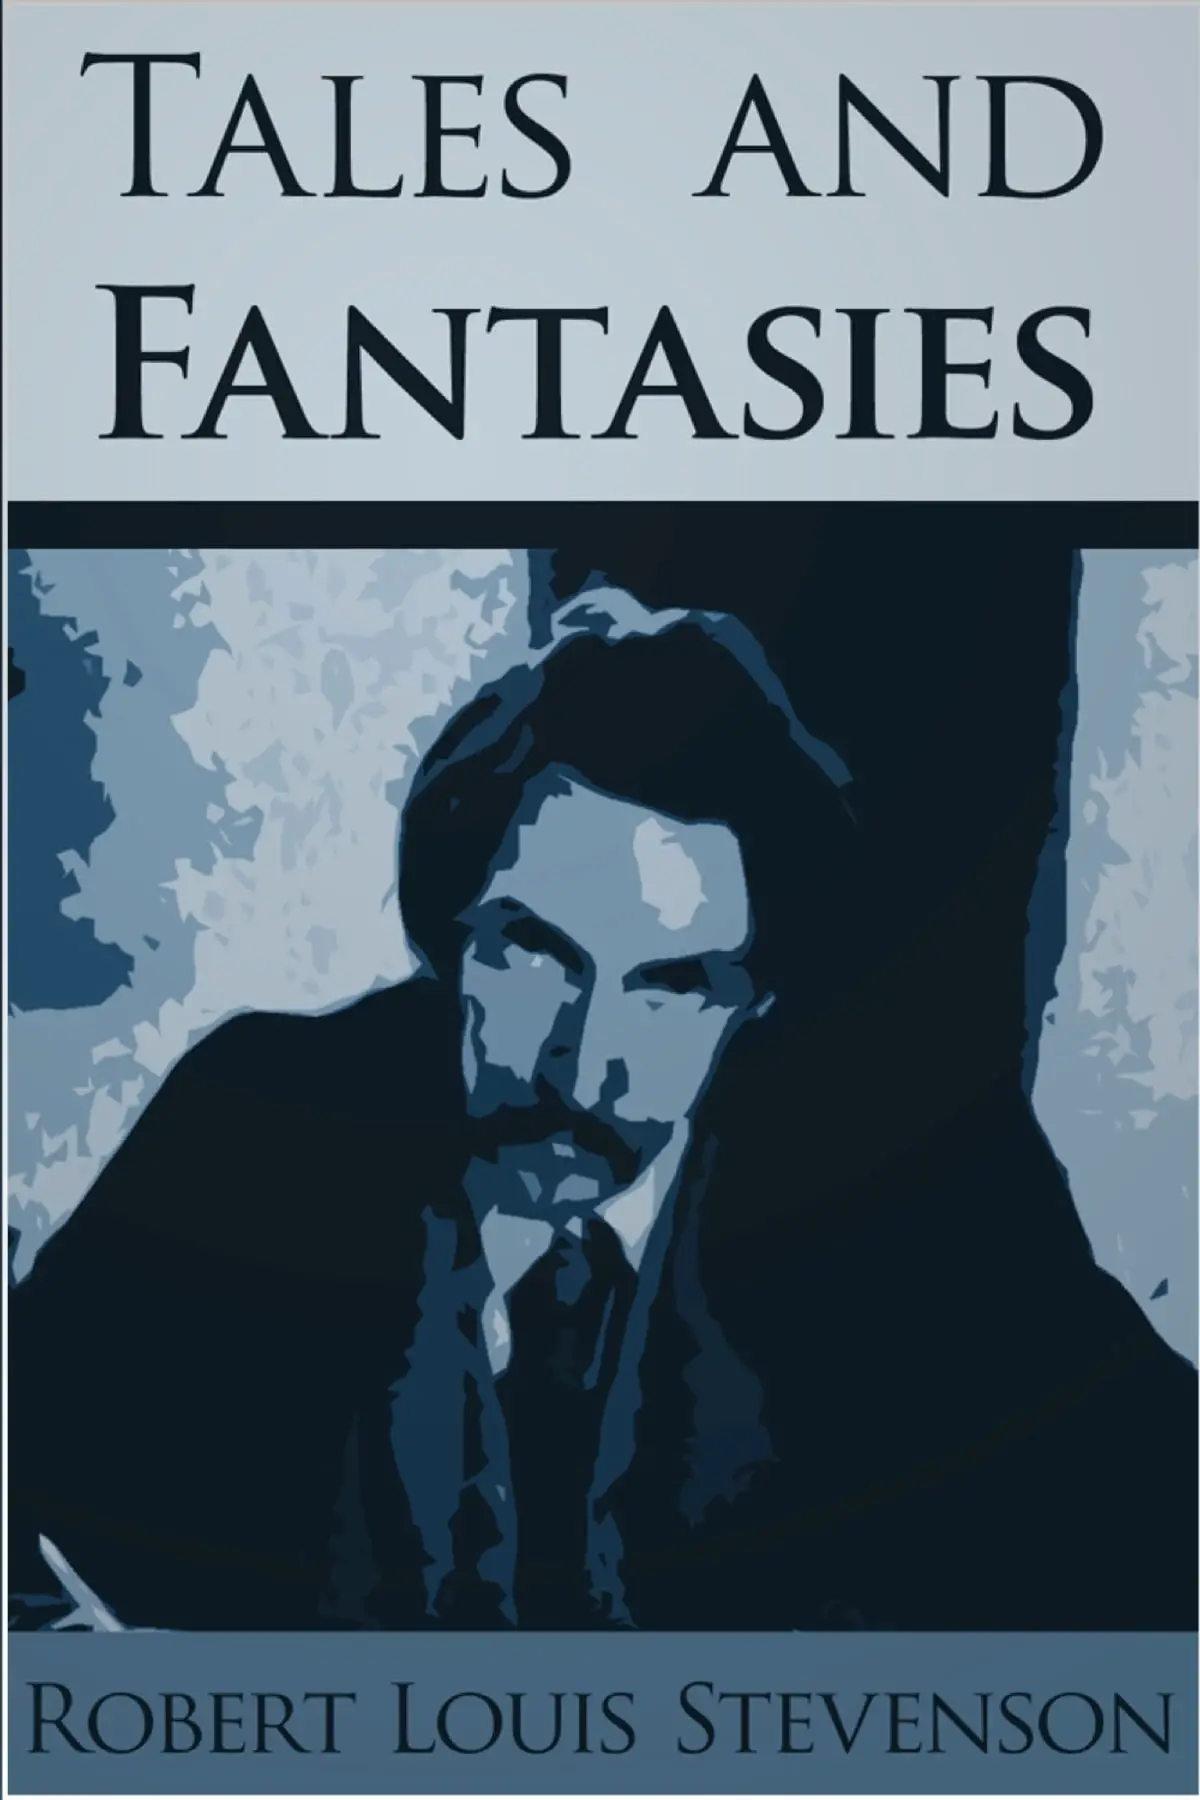 Tales and Fantasies author Robert Louis Stevenson